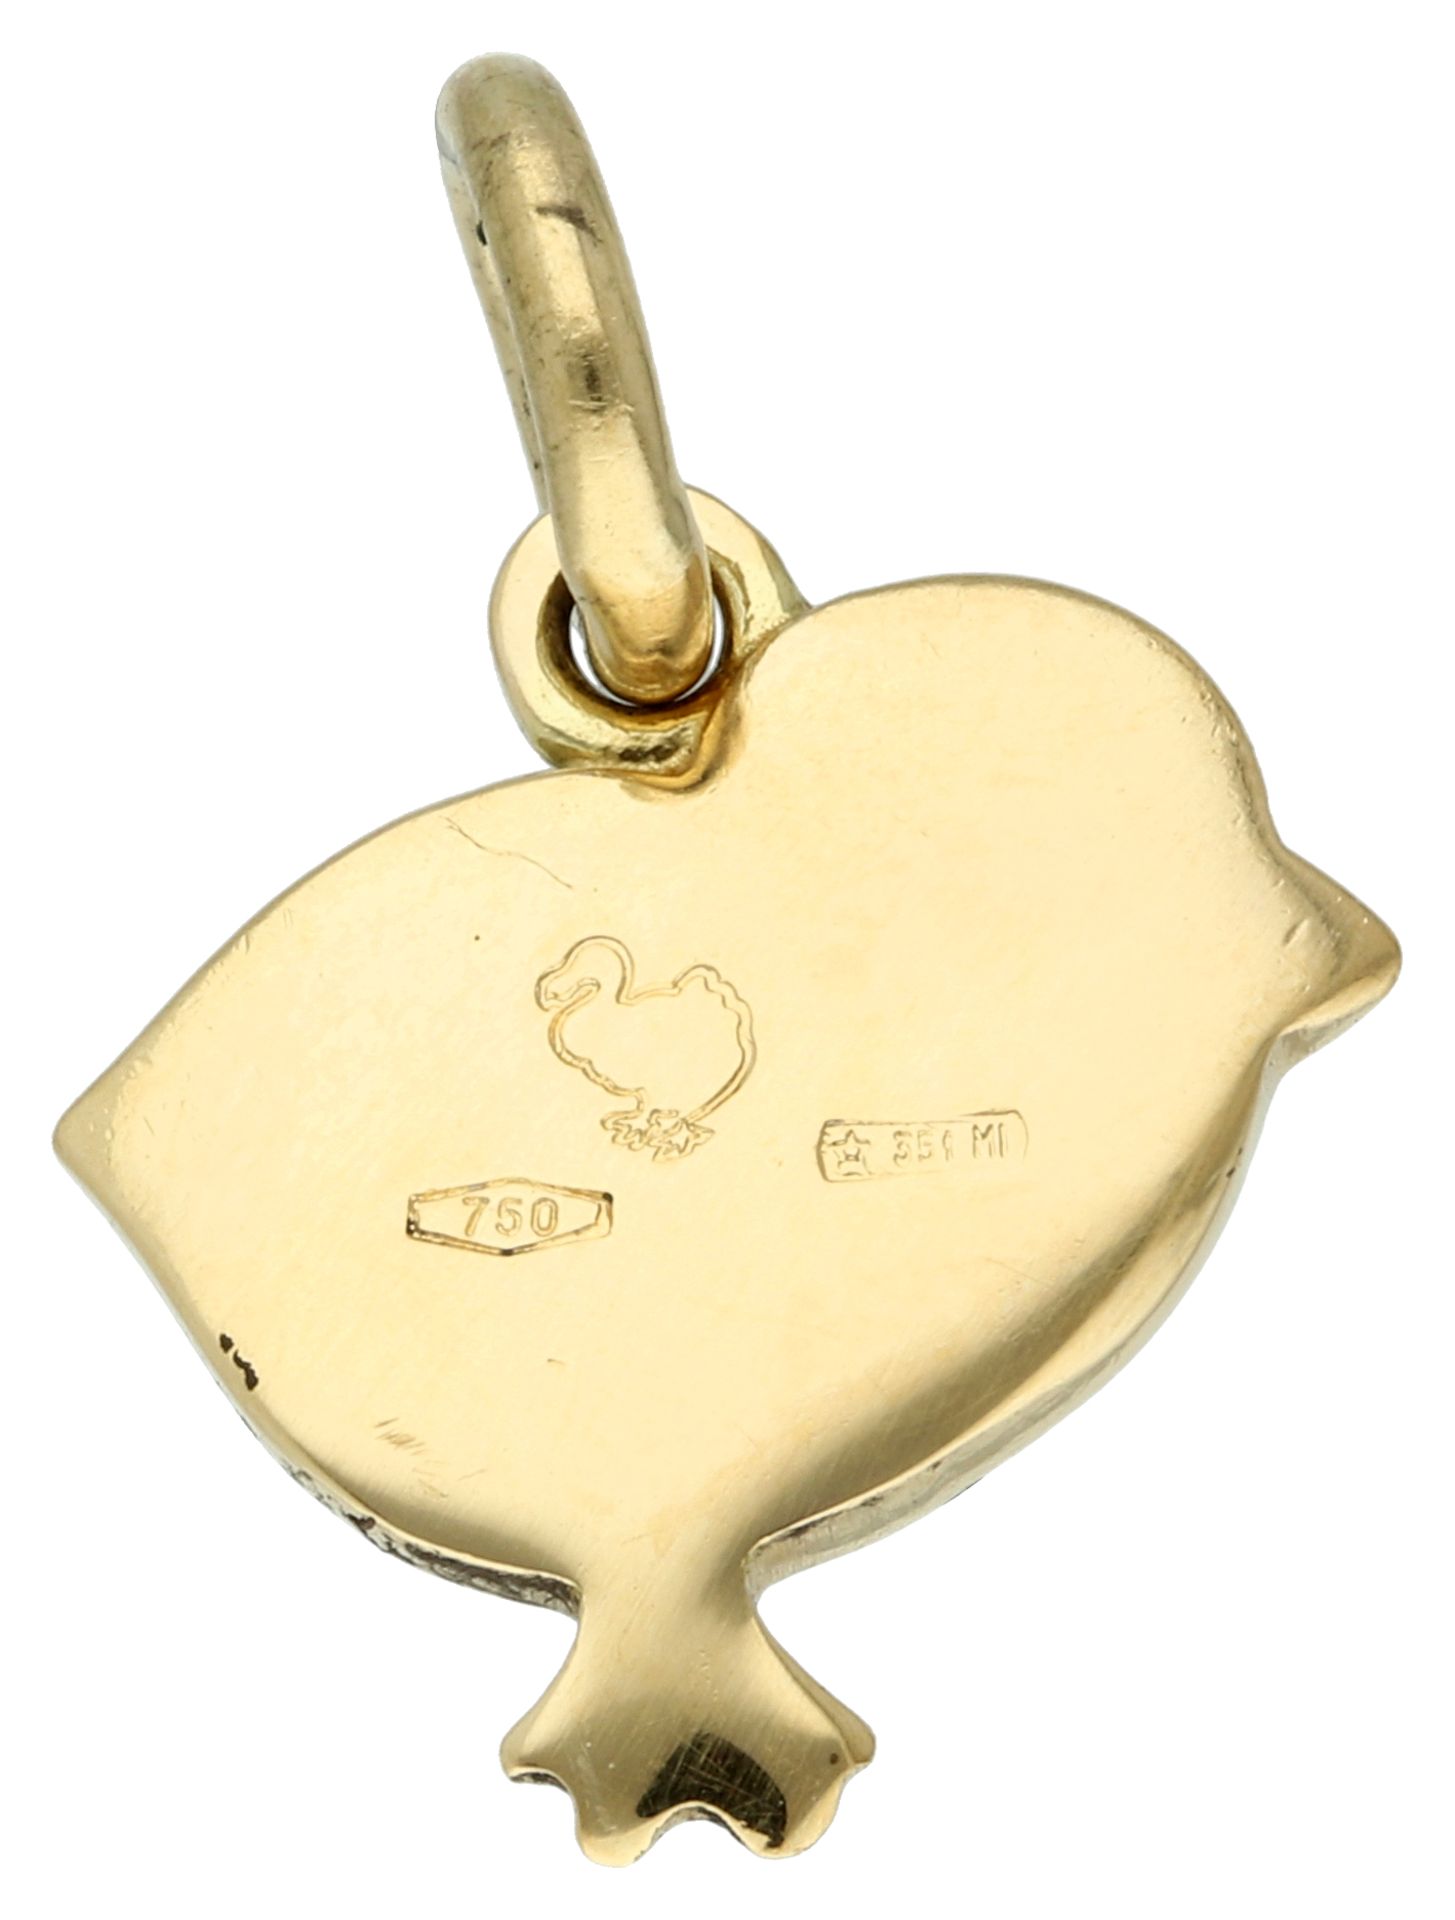 No Reserve - Pomellato 18K yellow gold DODO chick pendant/charm. - Image 2 of 3